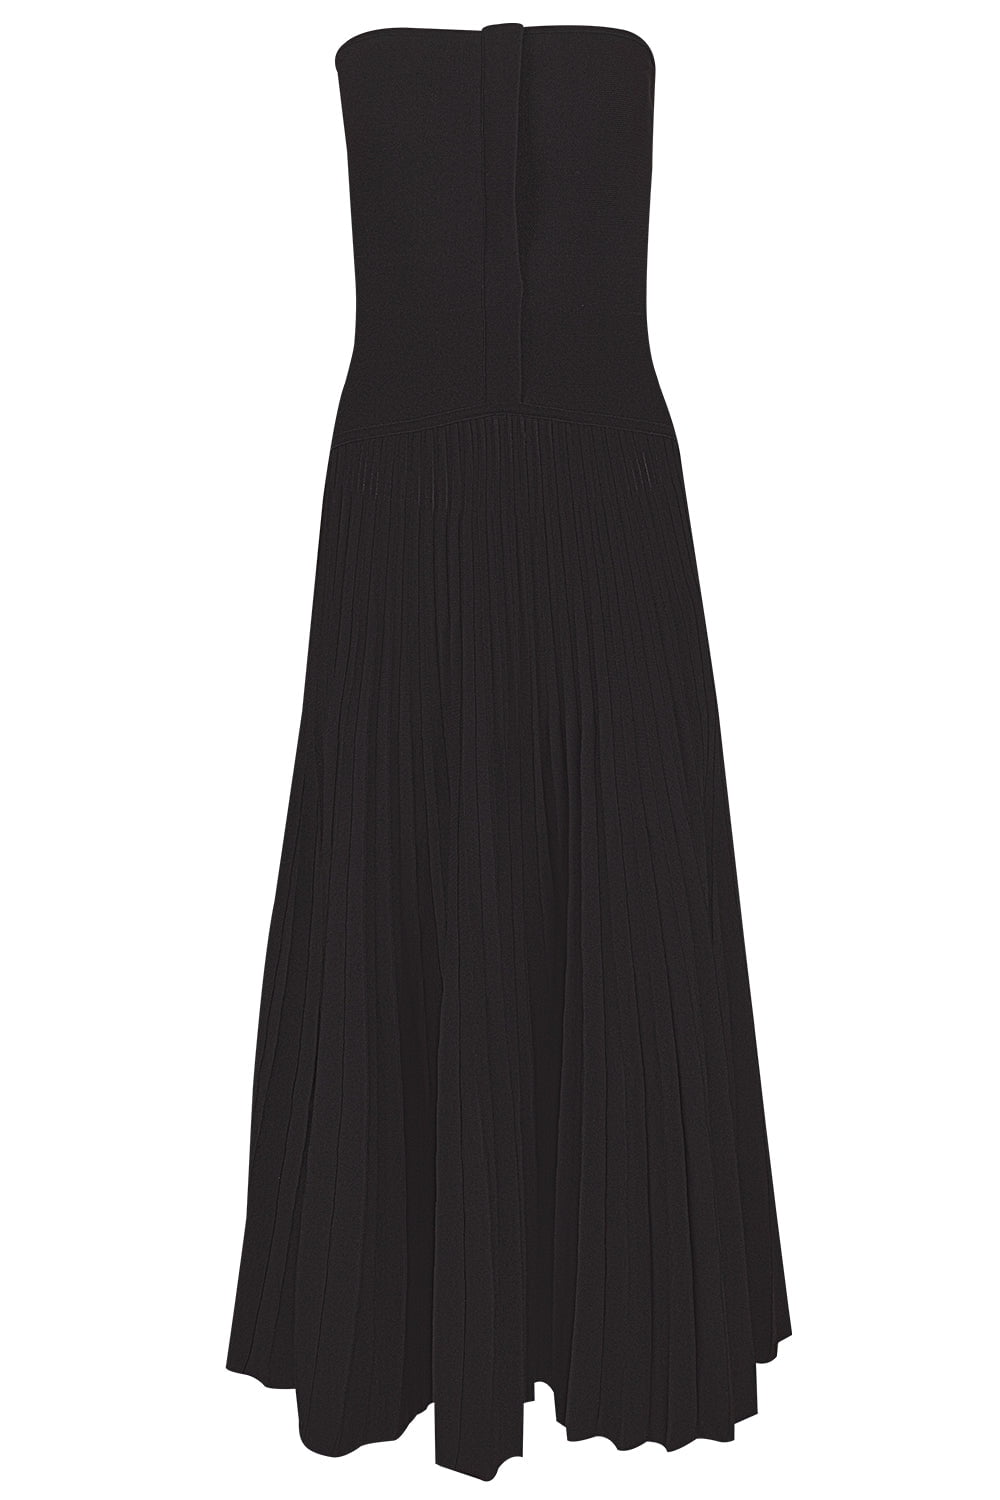 The Jada Dress CLOTHINGDRESSCASUAL BRANDON MAXWELL   